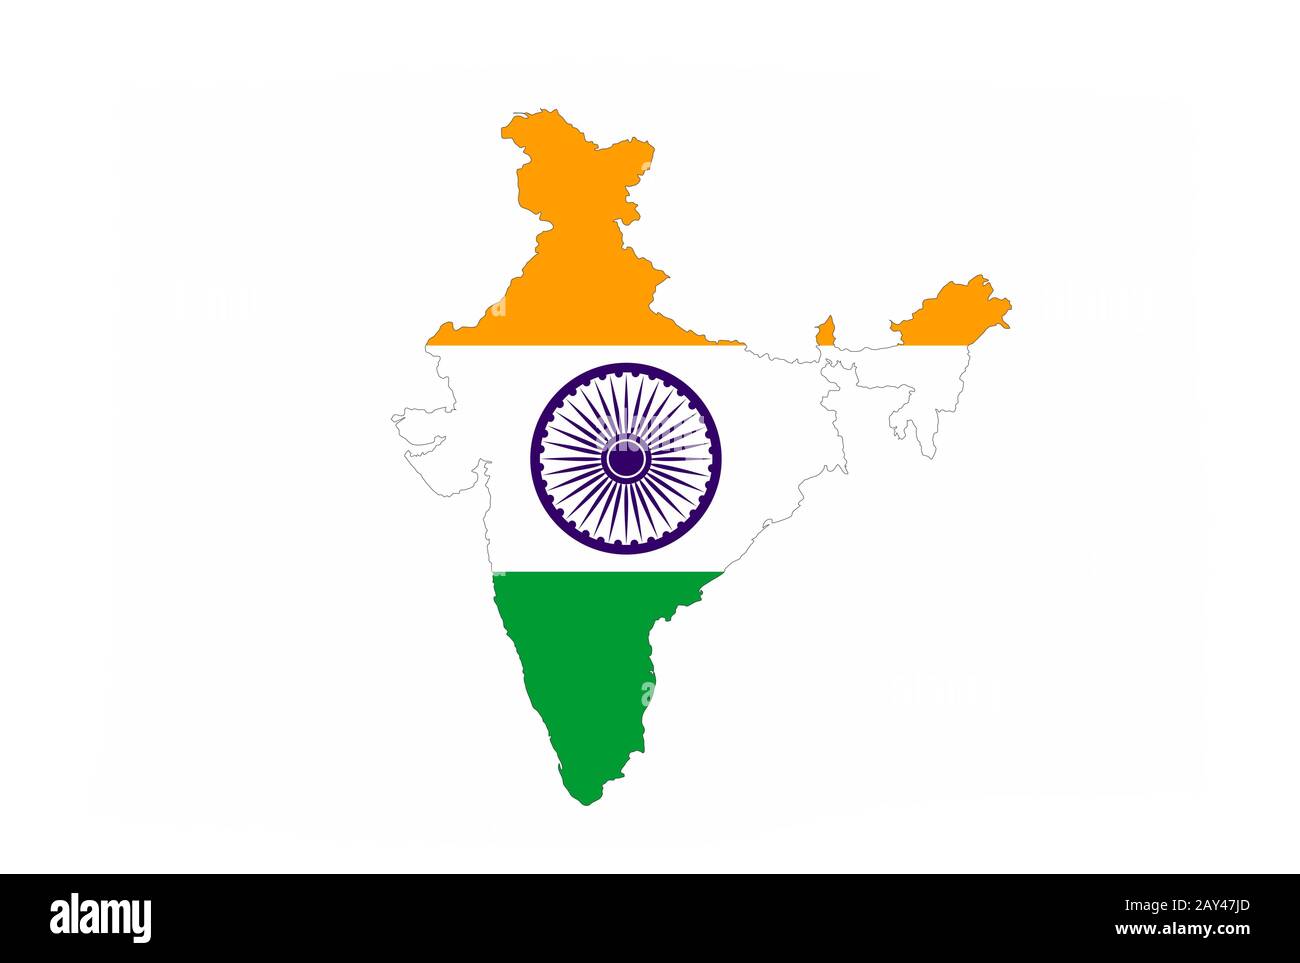 india flag map Stock Photo